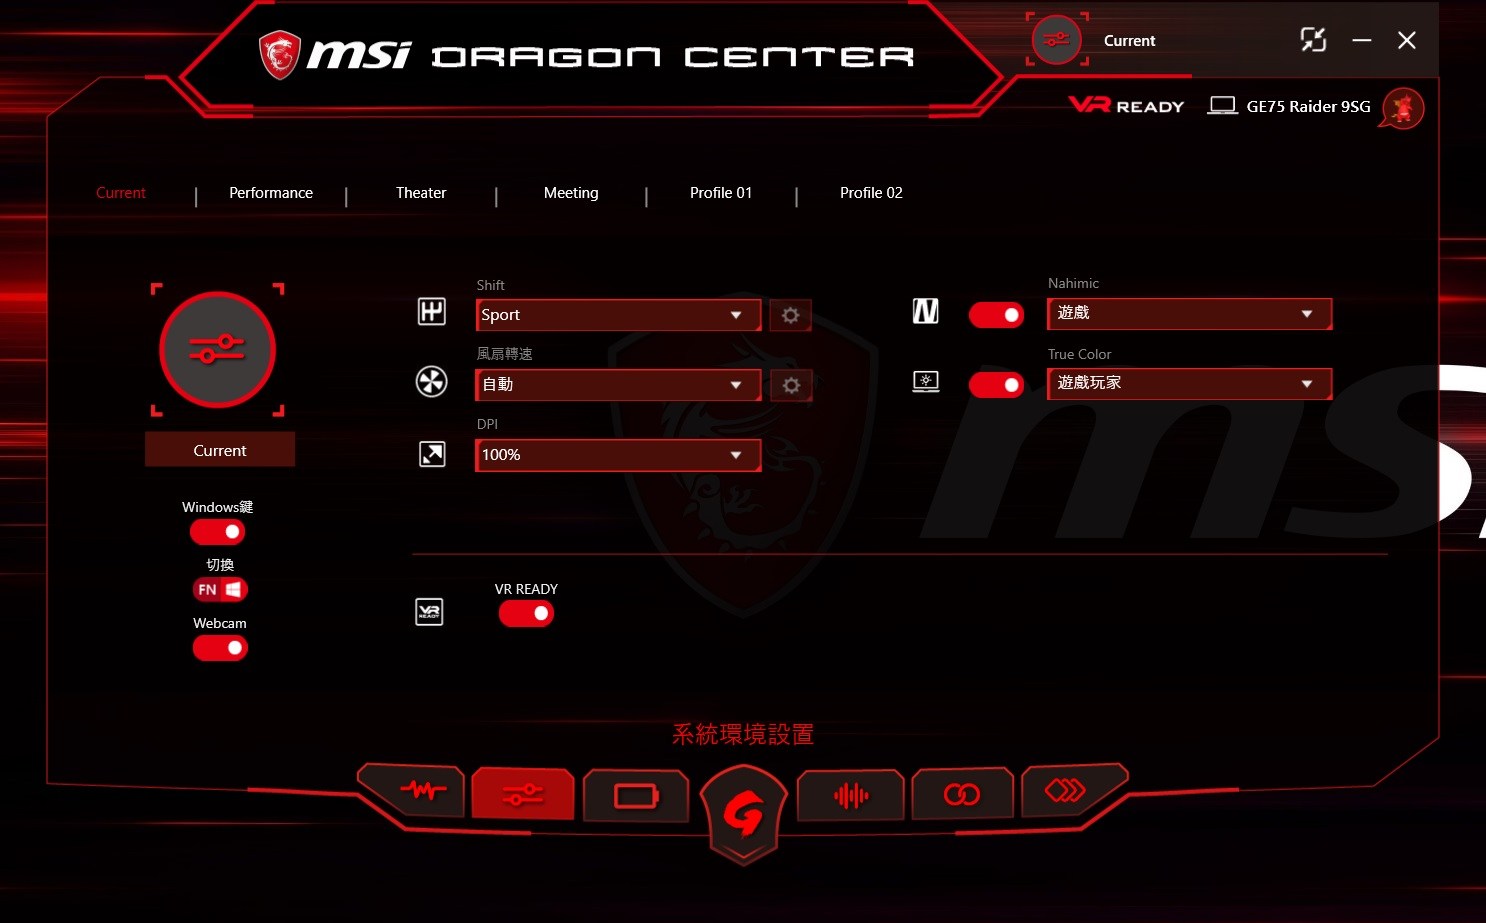 msi dragon center 2.2 download